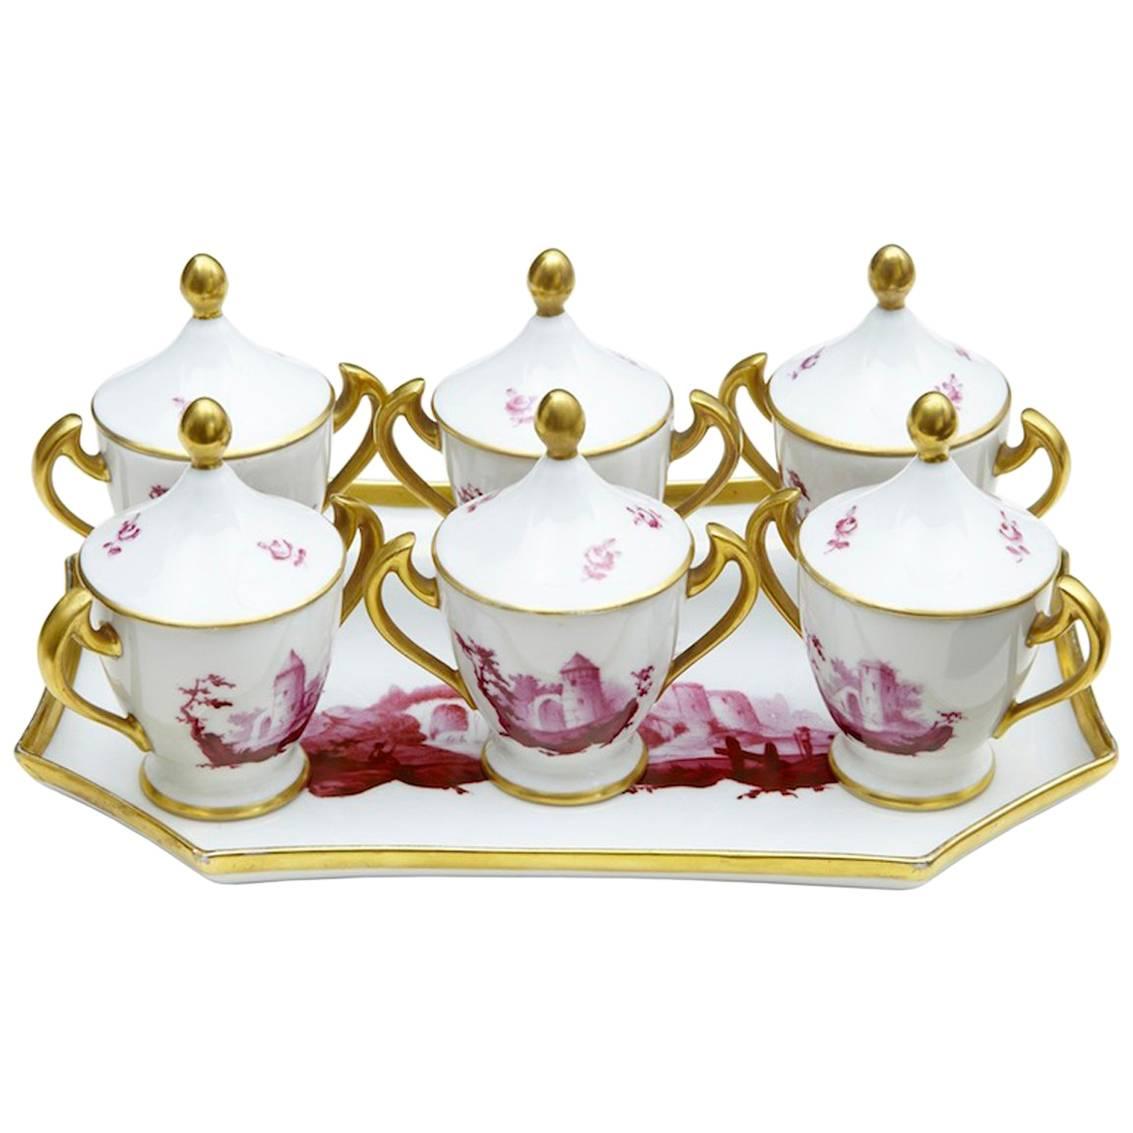 20th Century French Porcelain Seven-Piece Dessert Set